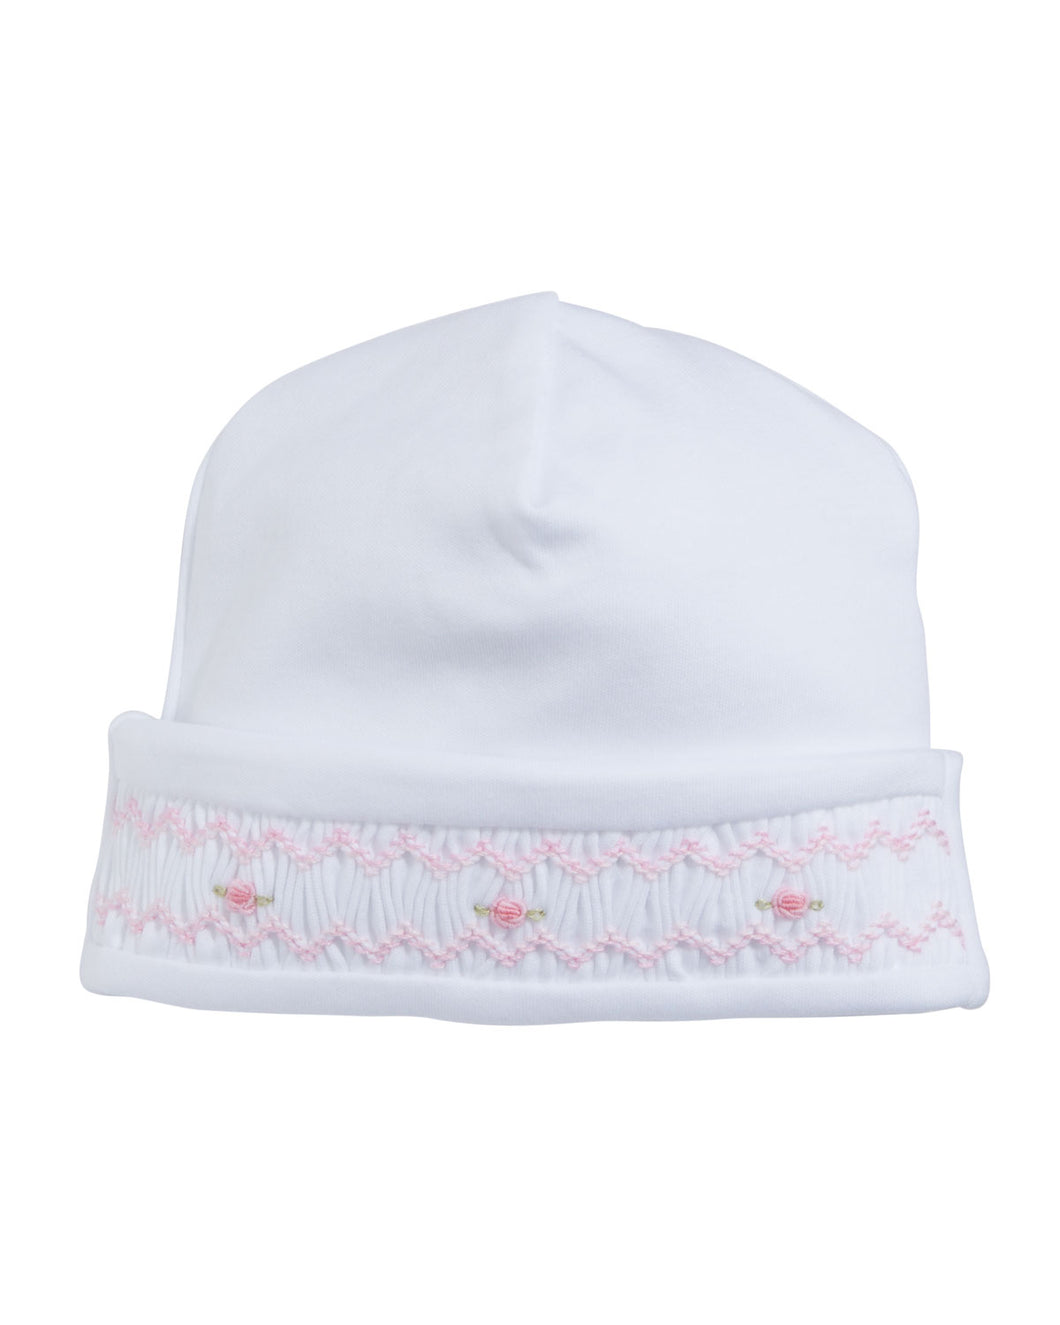 CLB Summer Bishop Smocked Hat - White with Pink